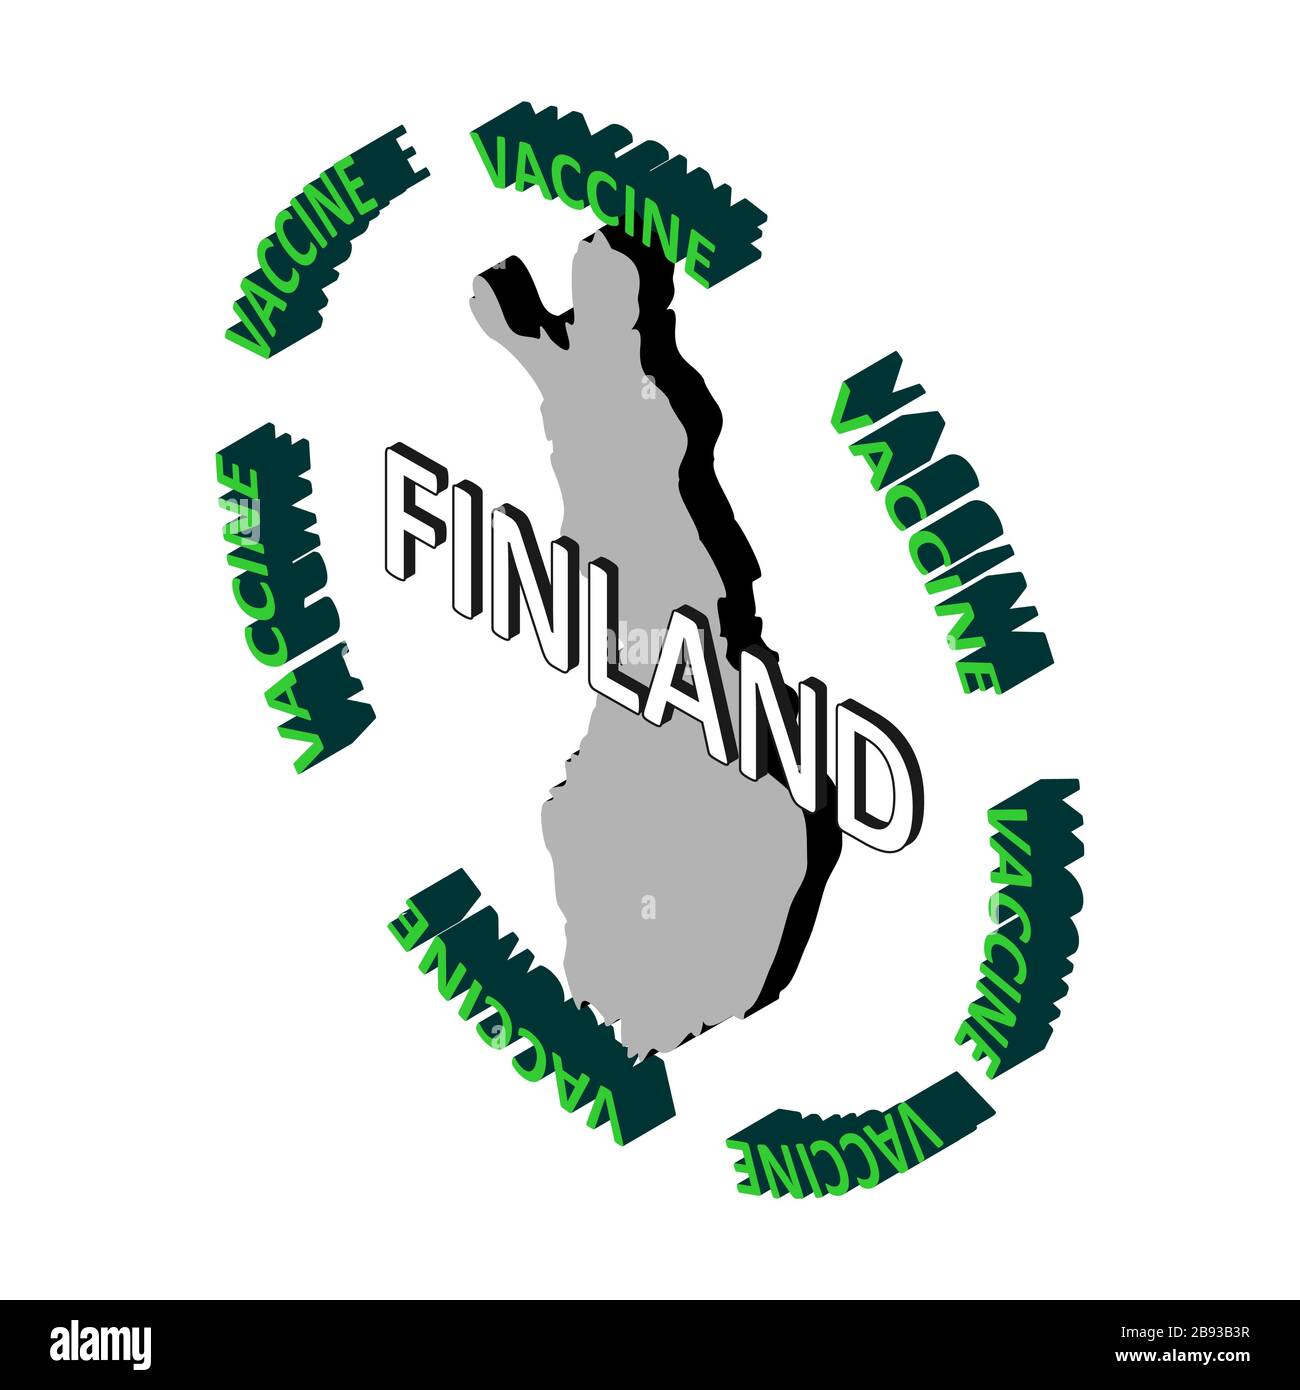 Finlandia coronavirus Immagini Vettoriali Stock - Alamy